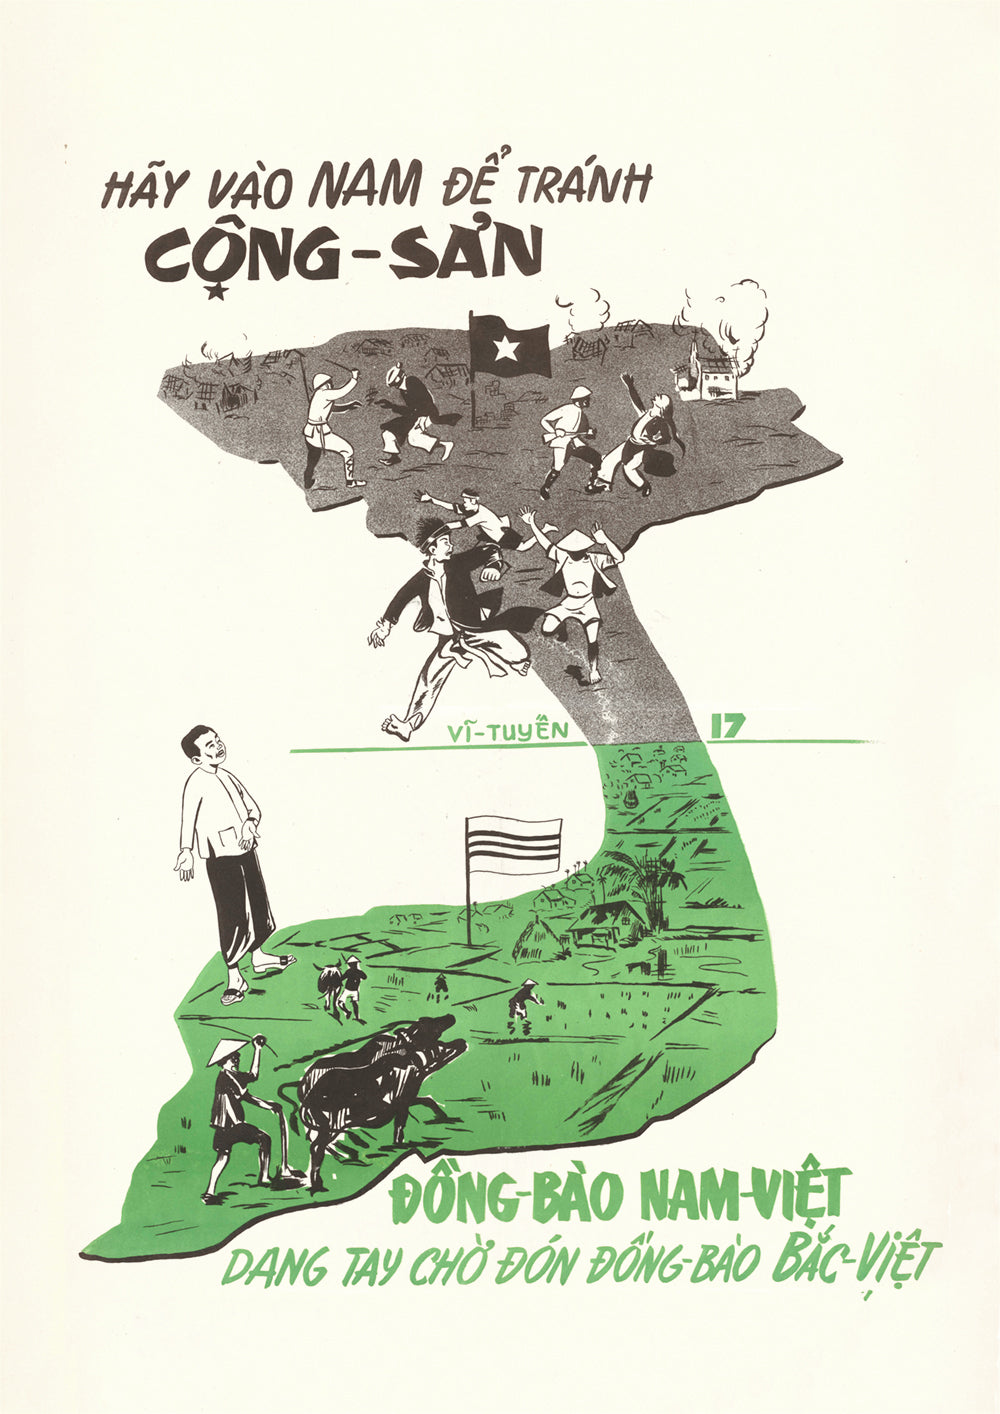 Go south to avoid Communism — Vietnamese poster